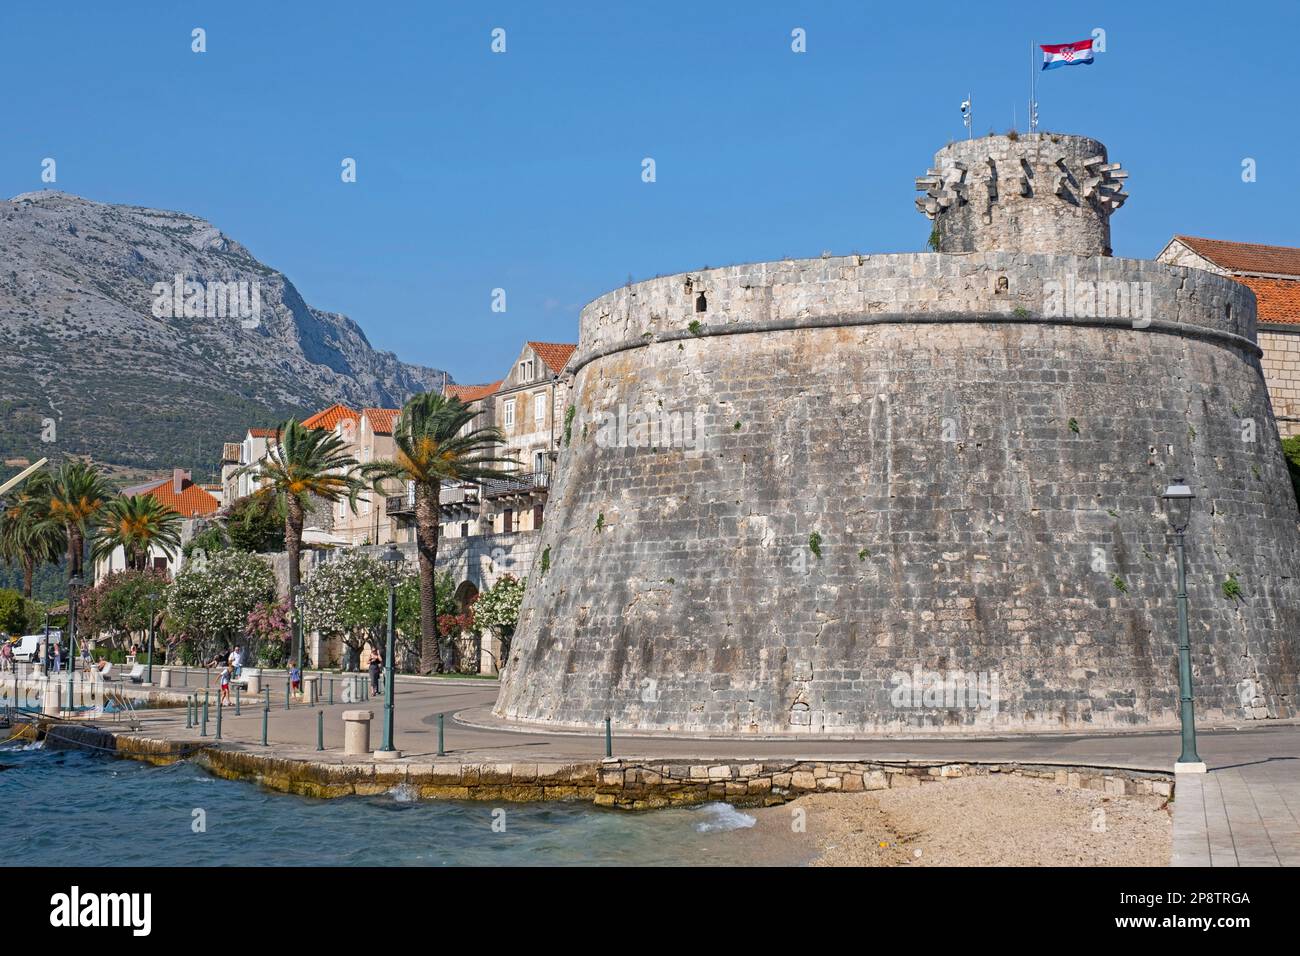 15th century Large Tower of the Governor of the Old Town along the Adriatic Sea on the island Korčula, Dalmatia, Dubrovnik-Neretva, Croatia Stock Photo